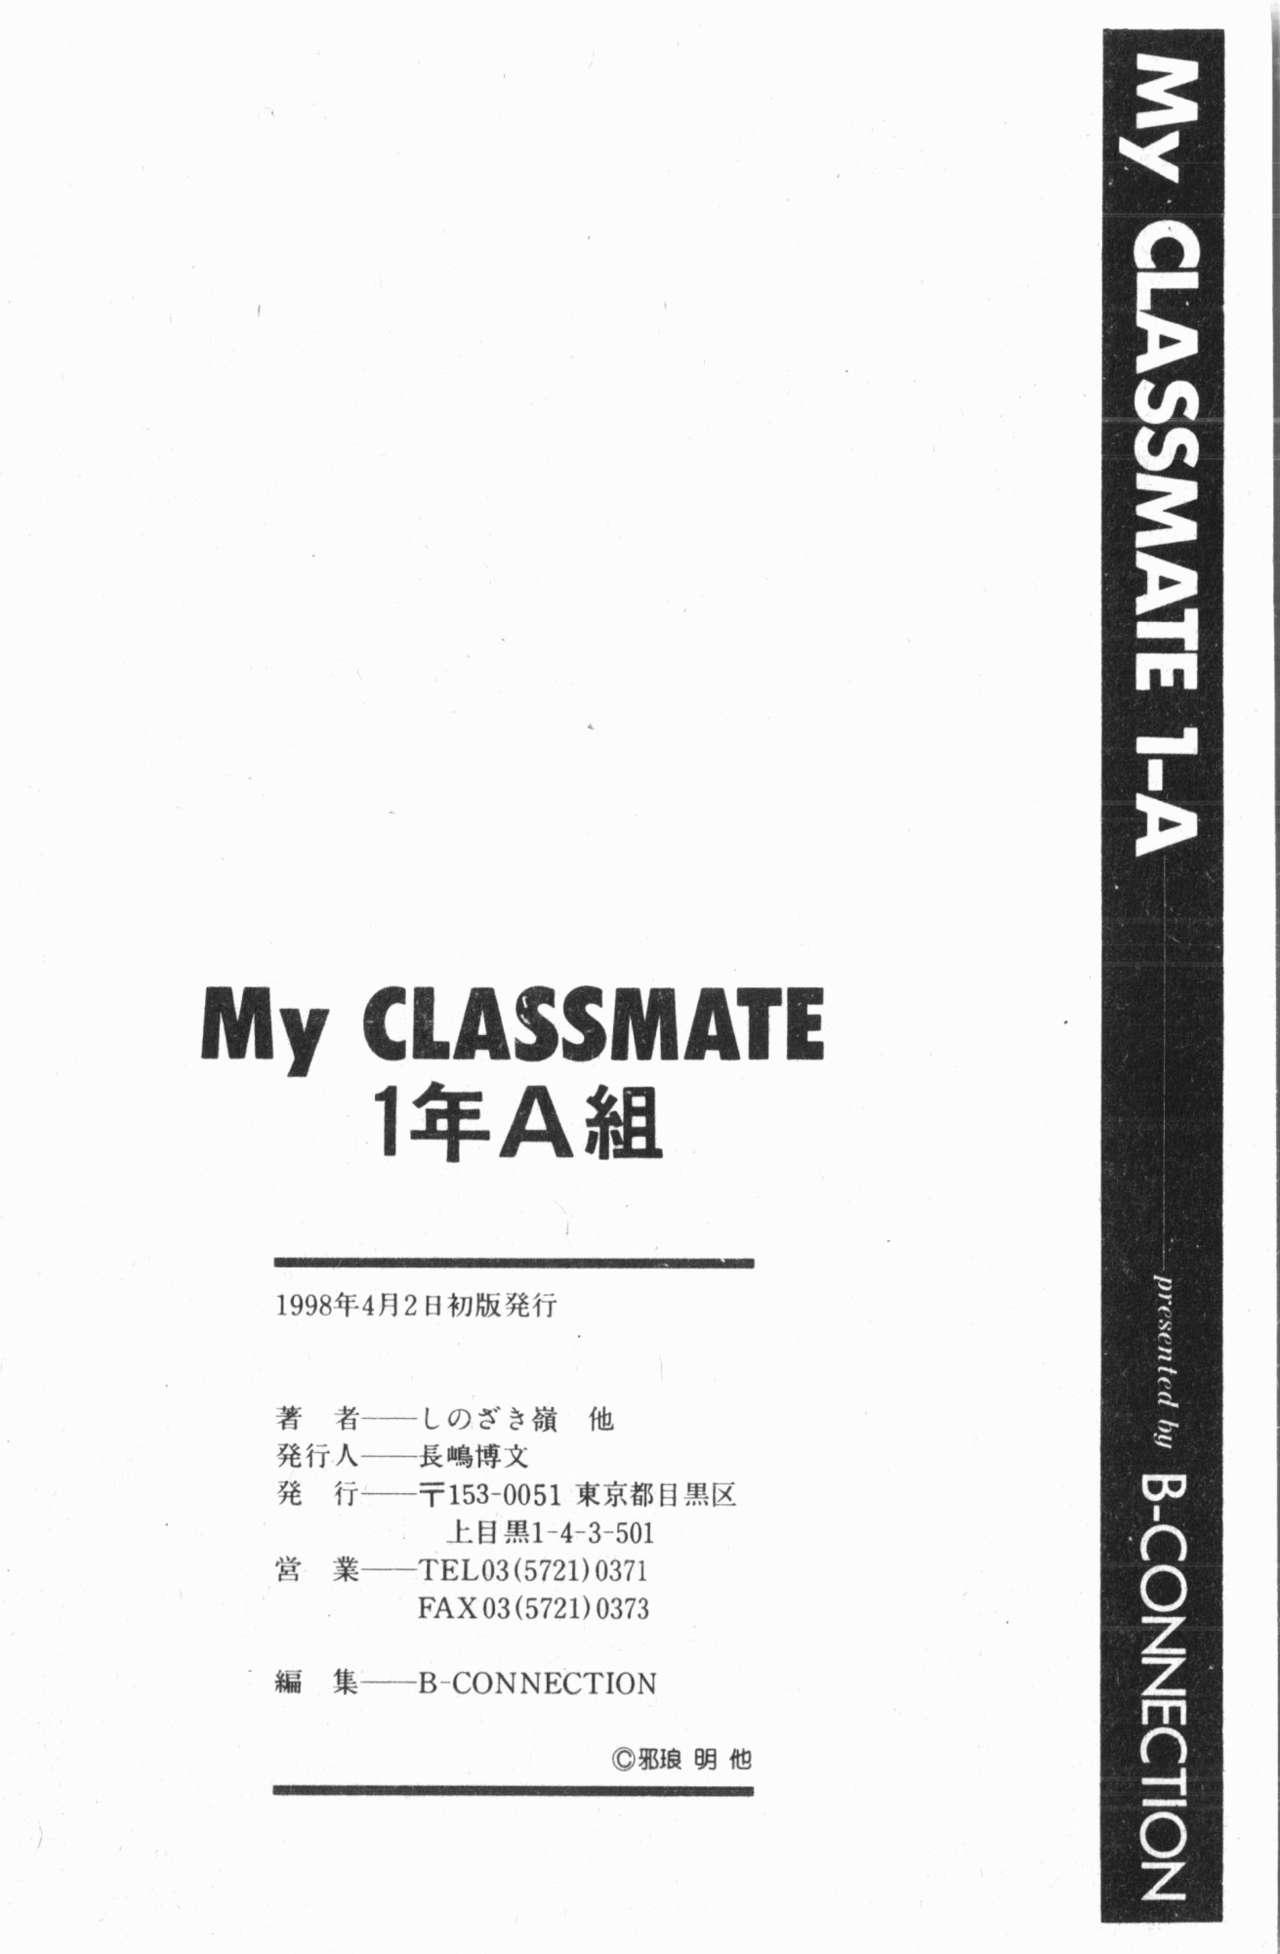 My Classmate 1-A 182